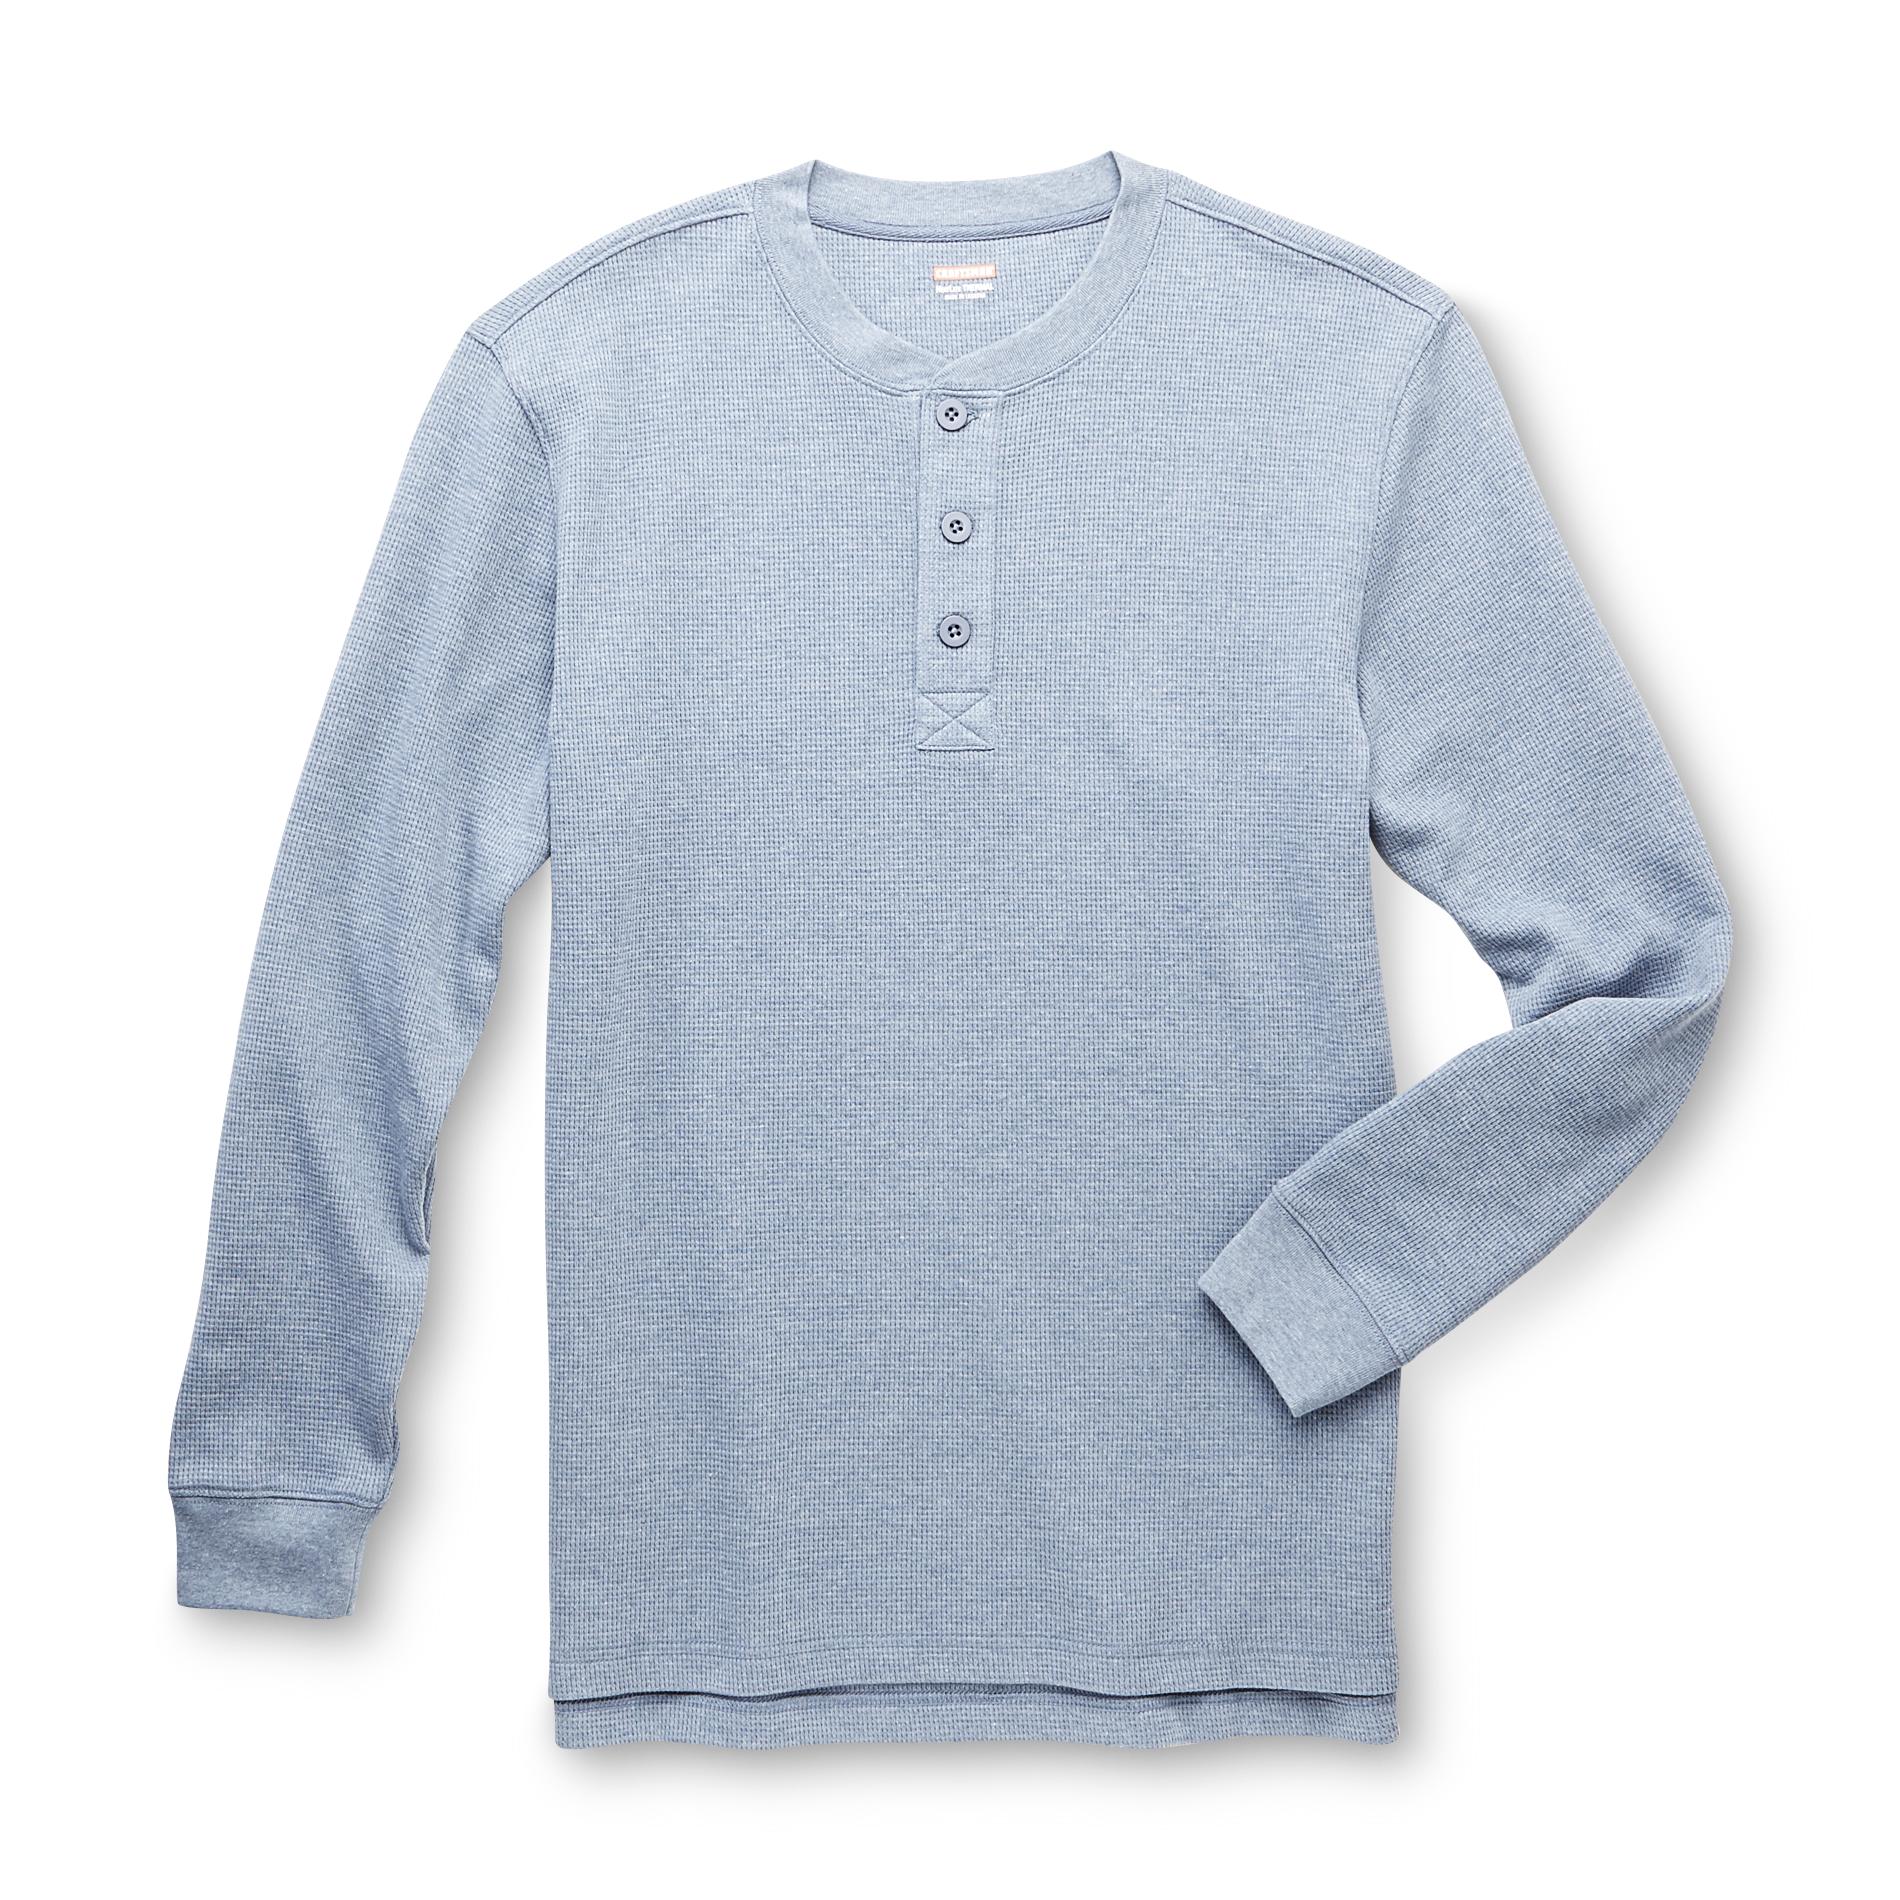 Craftsman Men's Thermal Knit Henley Shirt